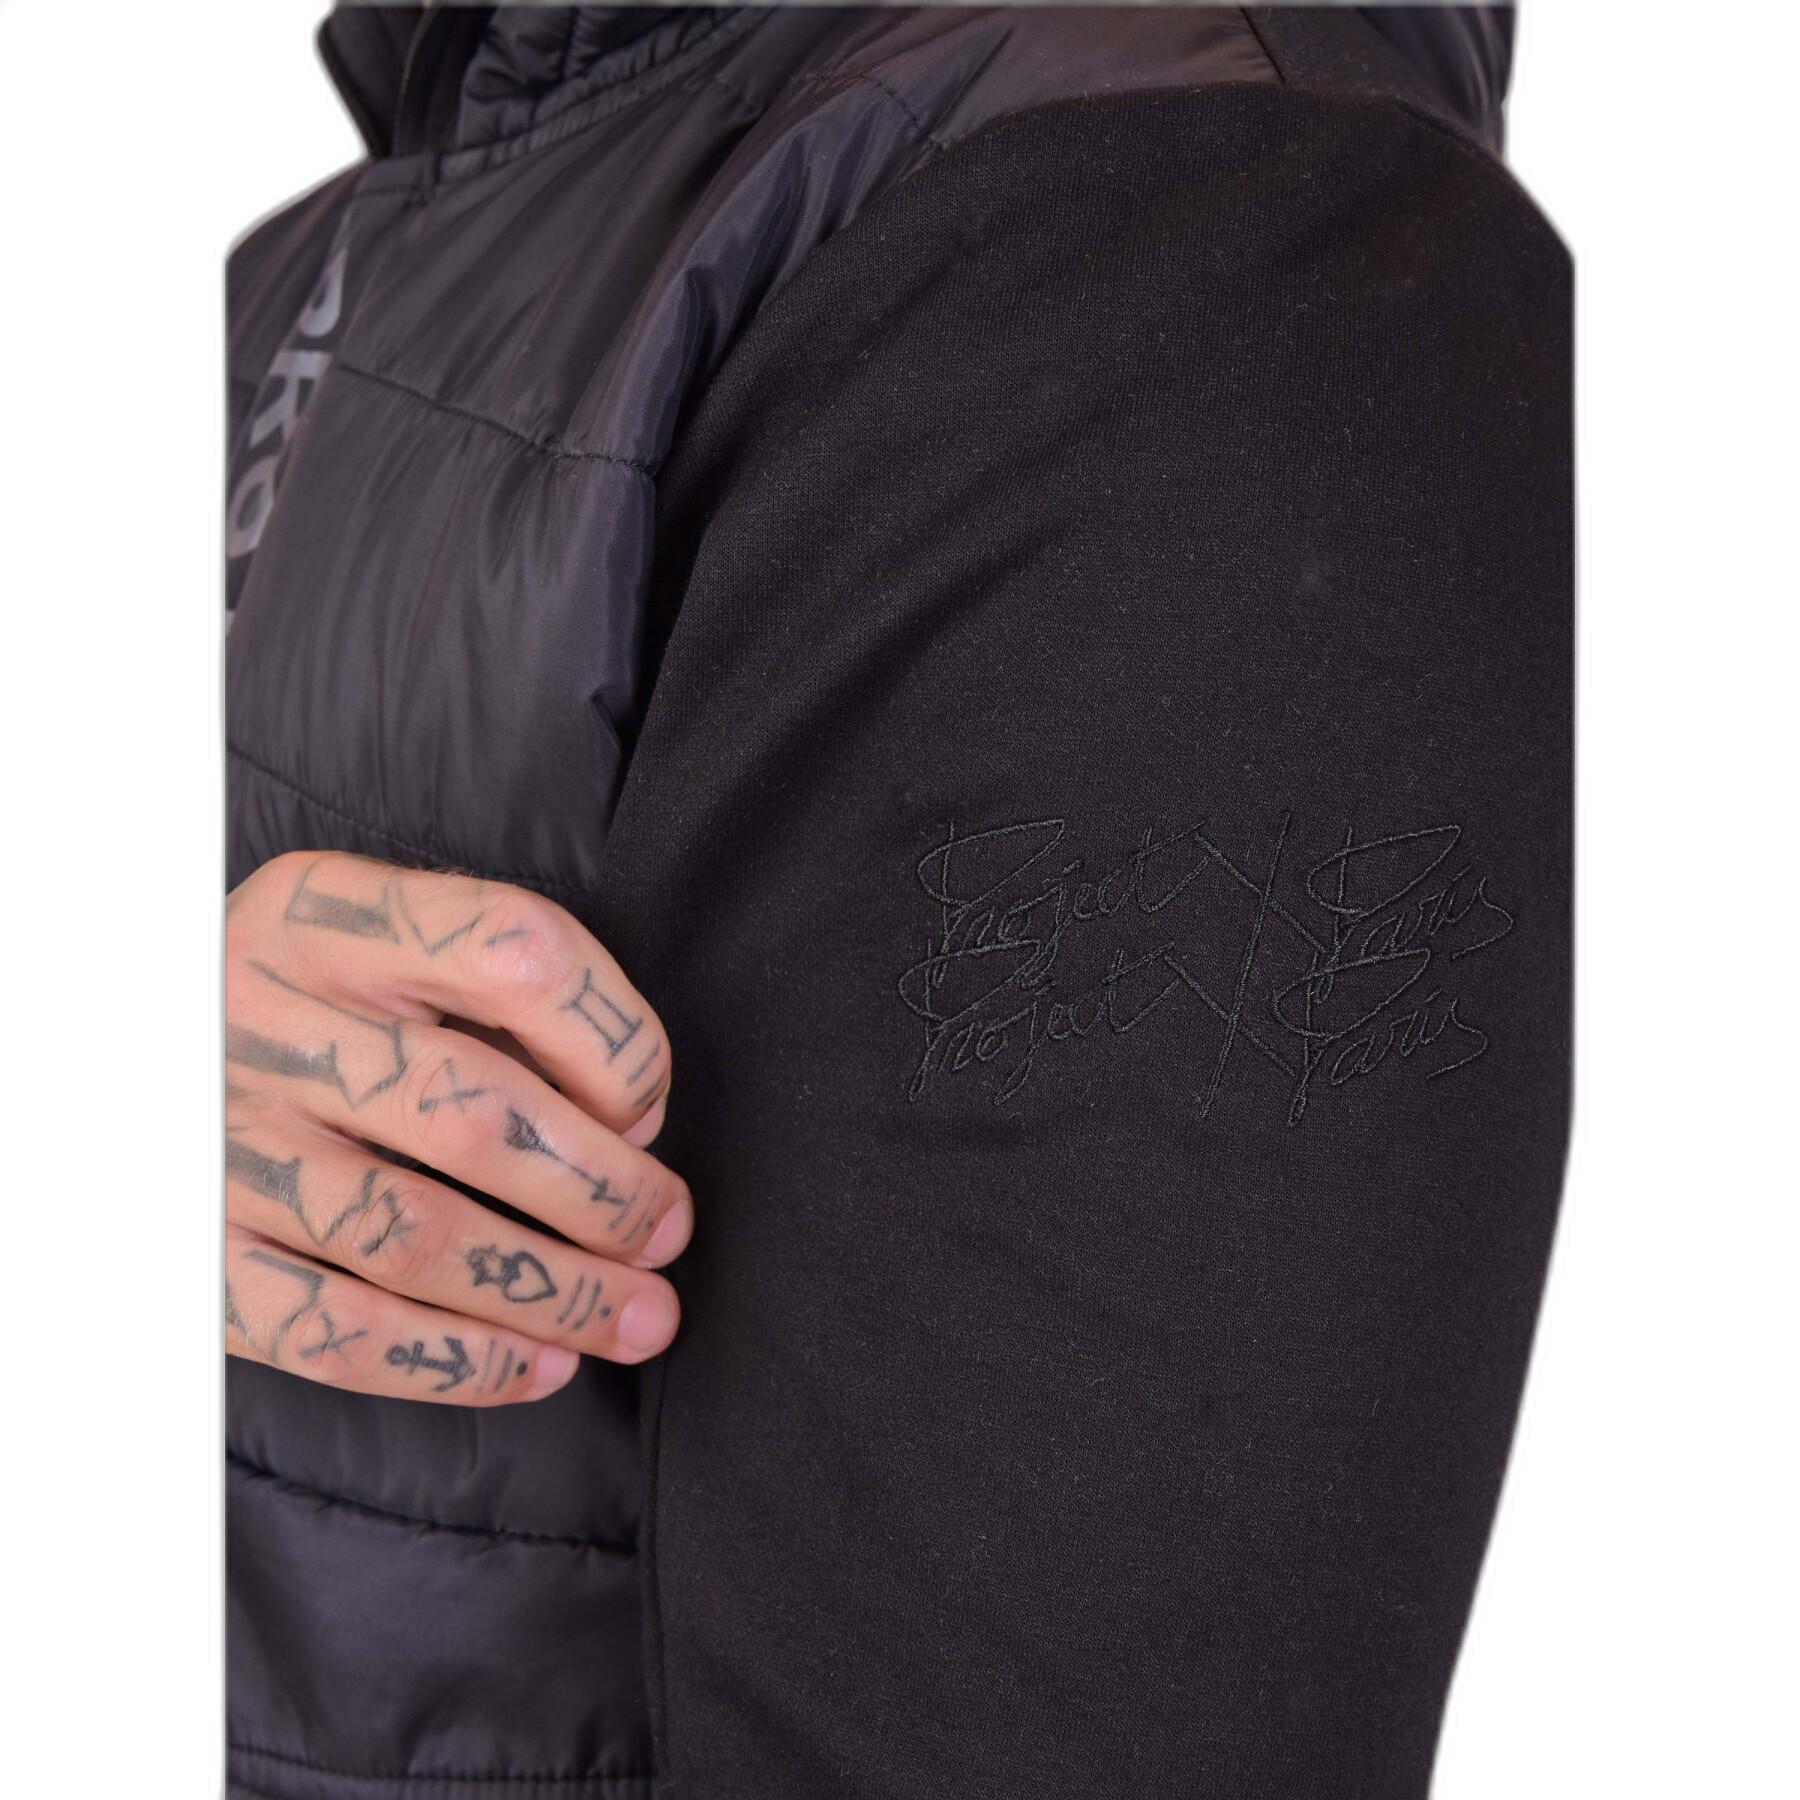 Bi-material hooded jacket Project X Paris